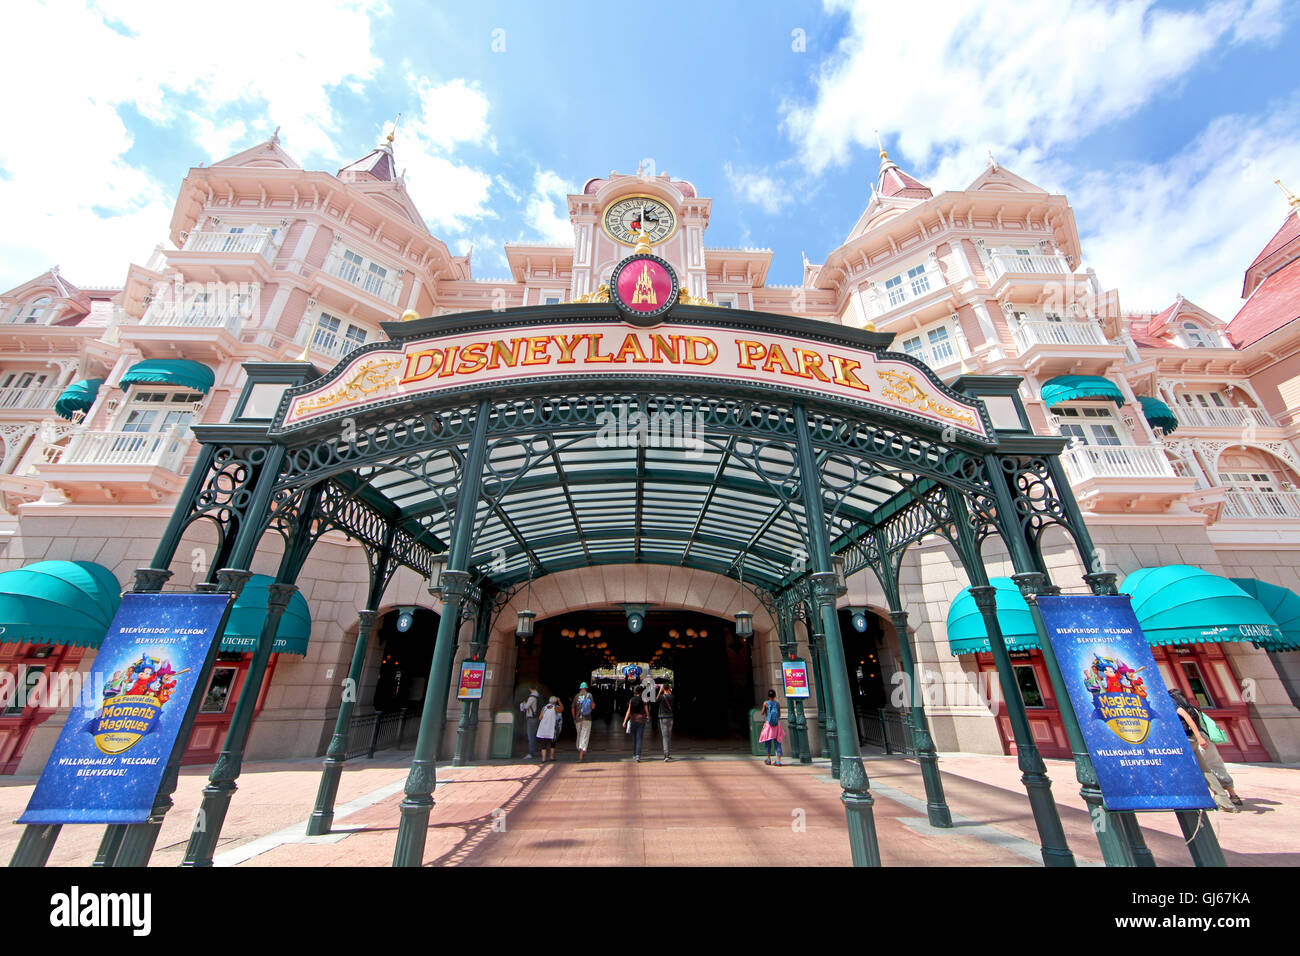 Marne La Vallee, France. 26 juin, 2011. Le Disneyland Hotel et l'entrée au parc Disneyland à Disneyland Resort Paris. Banque D'Images